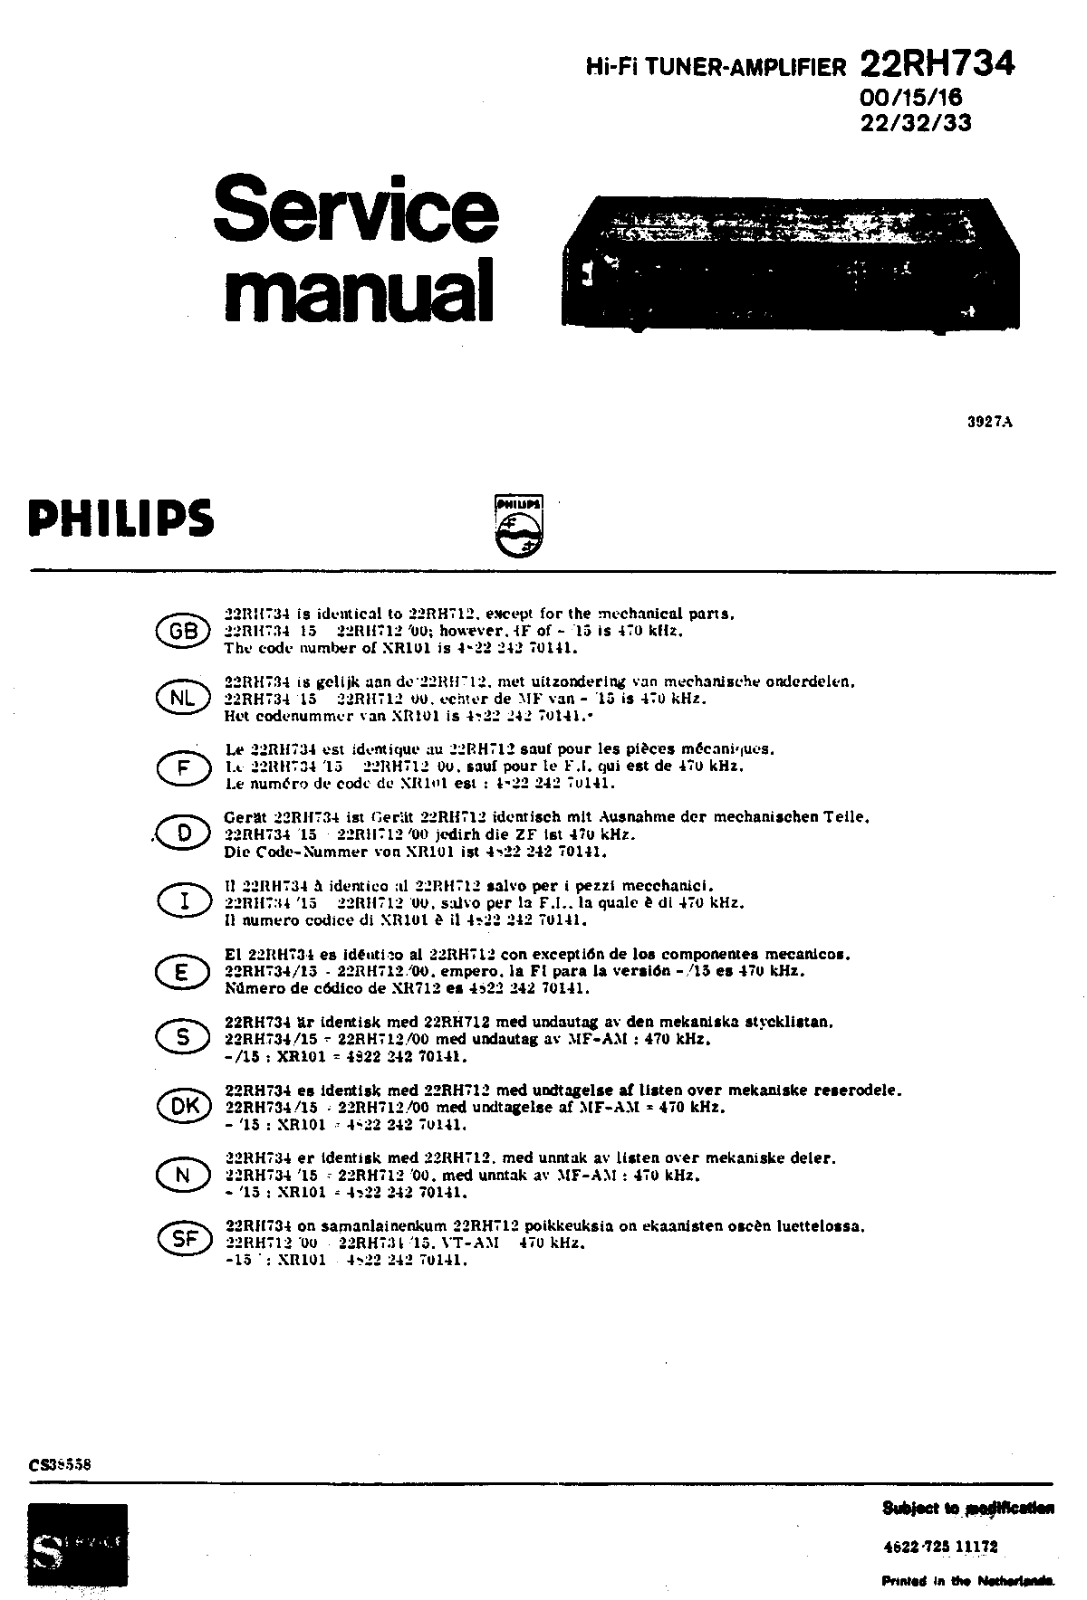 Philips 22-RH-734 Service Manual